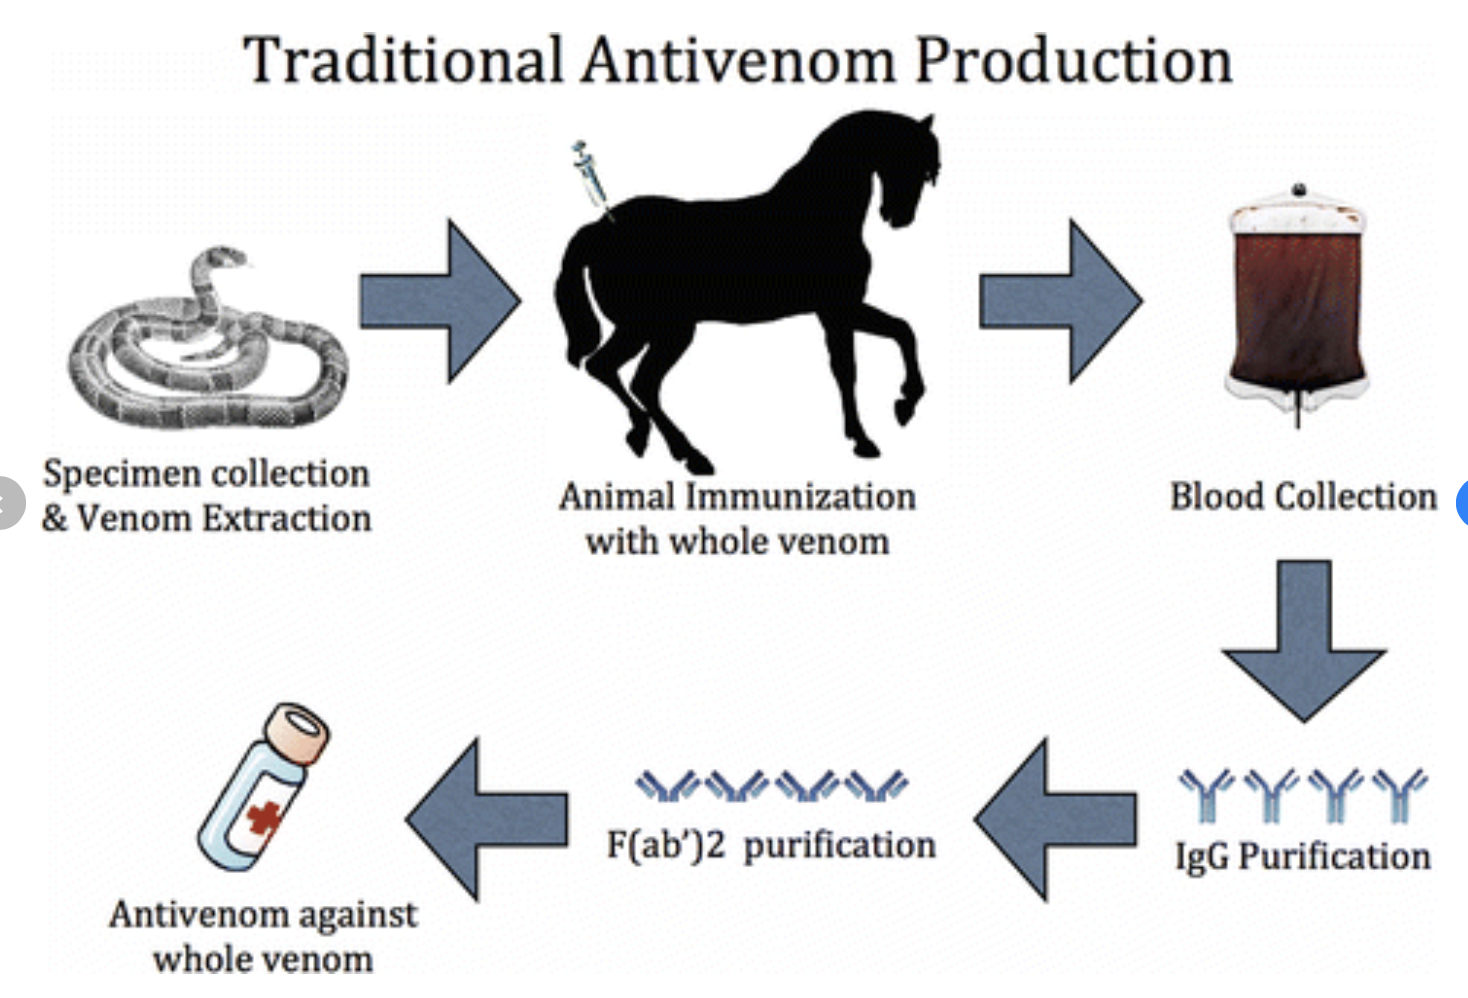 Production of antivenin serum